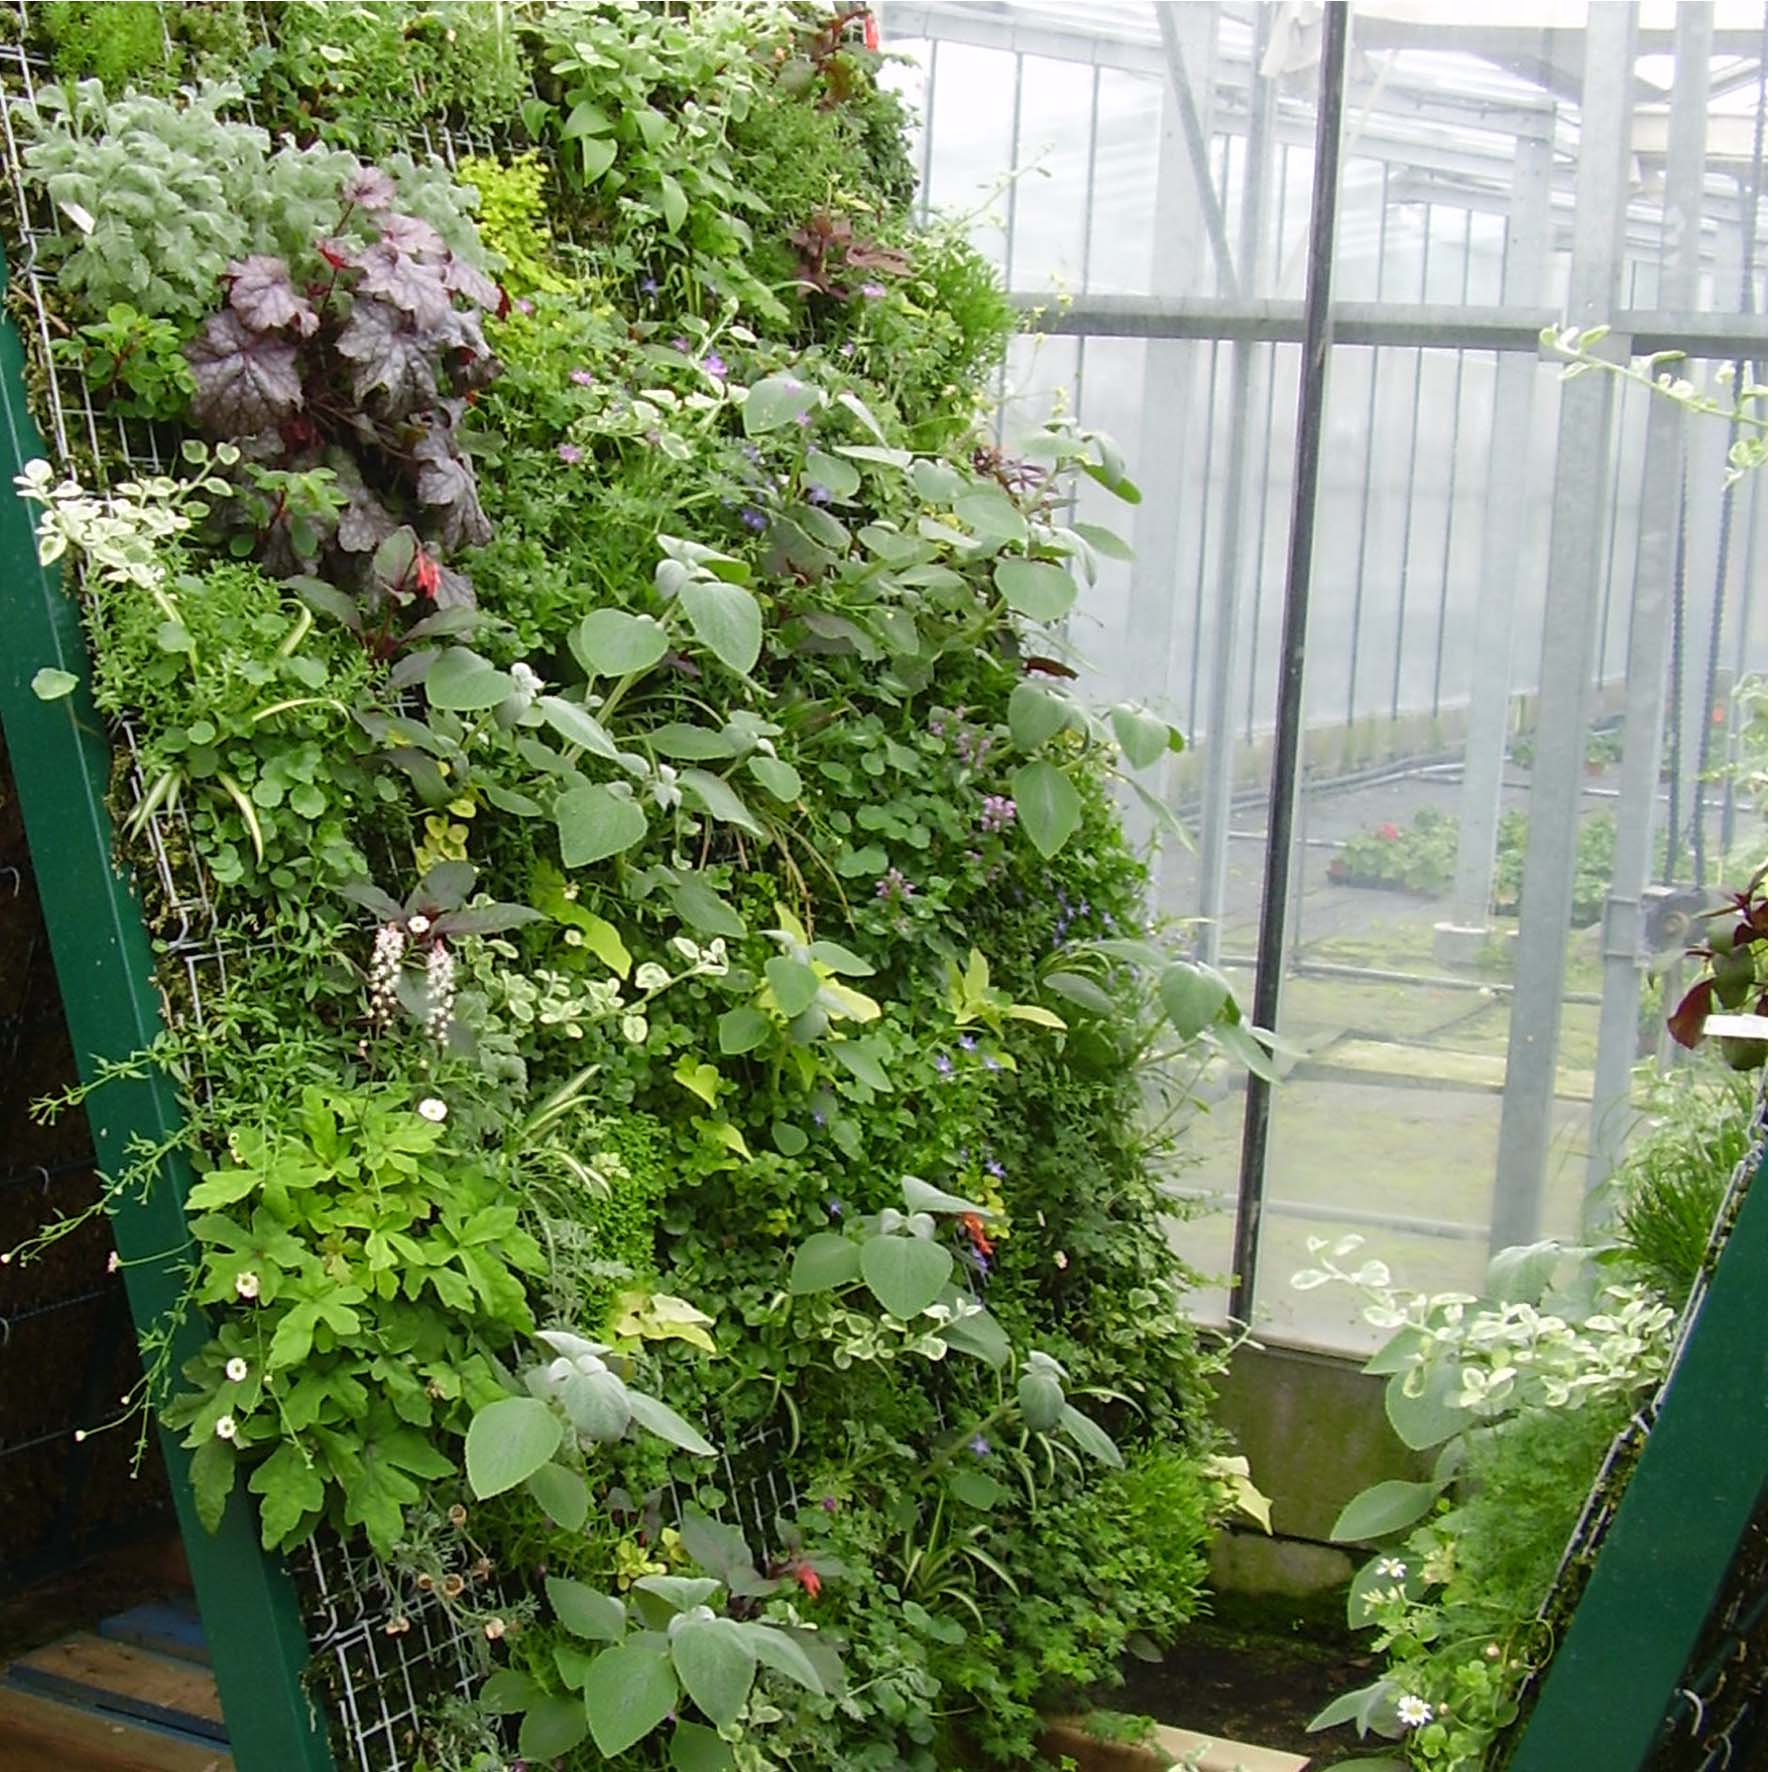 Vertical vegetable garden inside a greenhouse